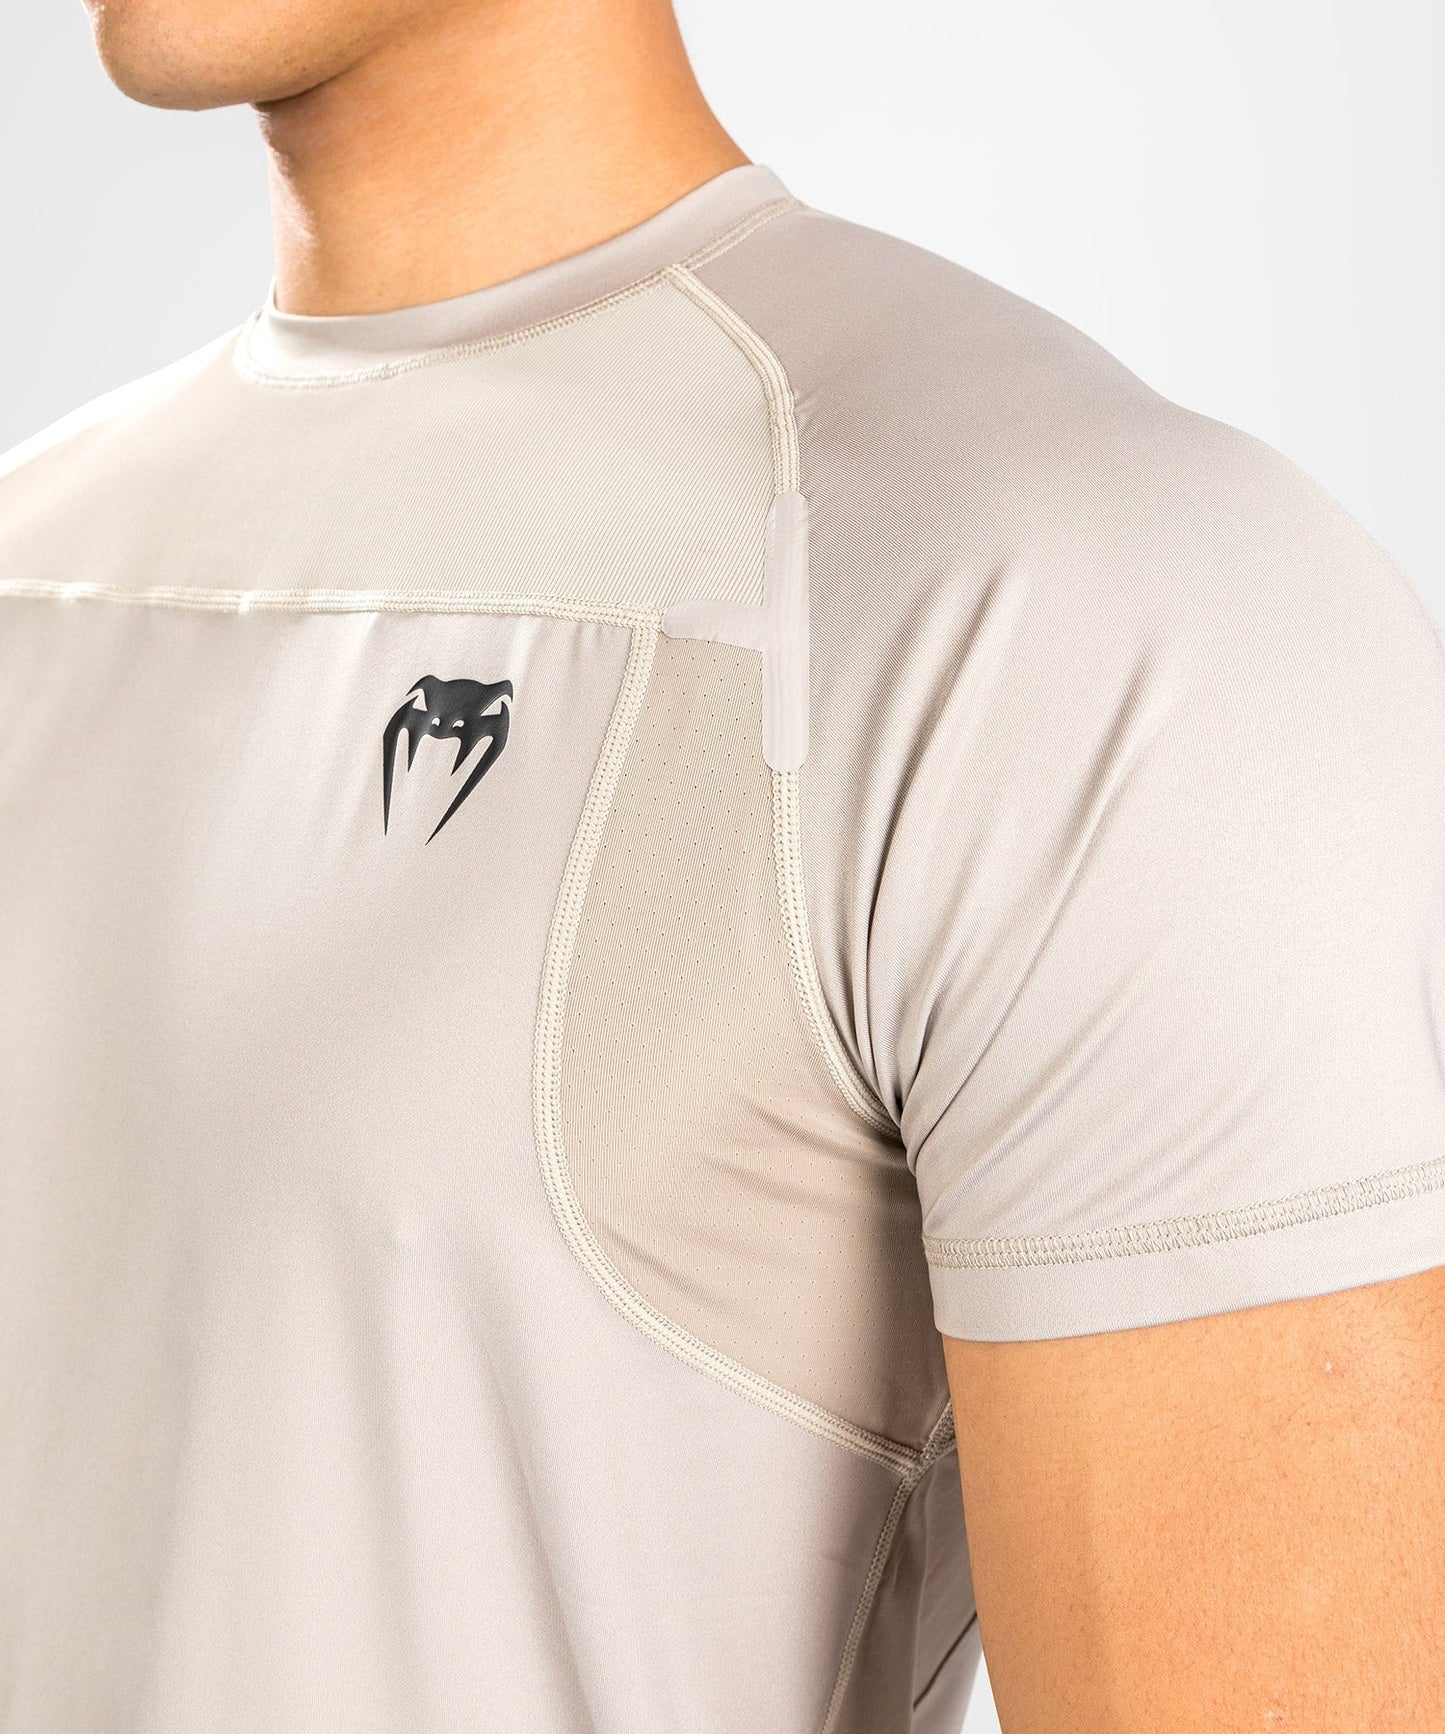 Venum G-Fit Air Dry Tech T-Shirt - Sand